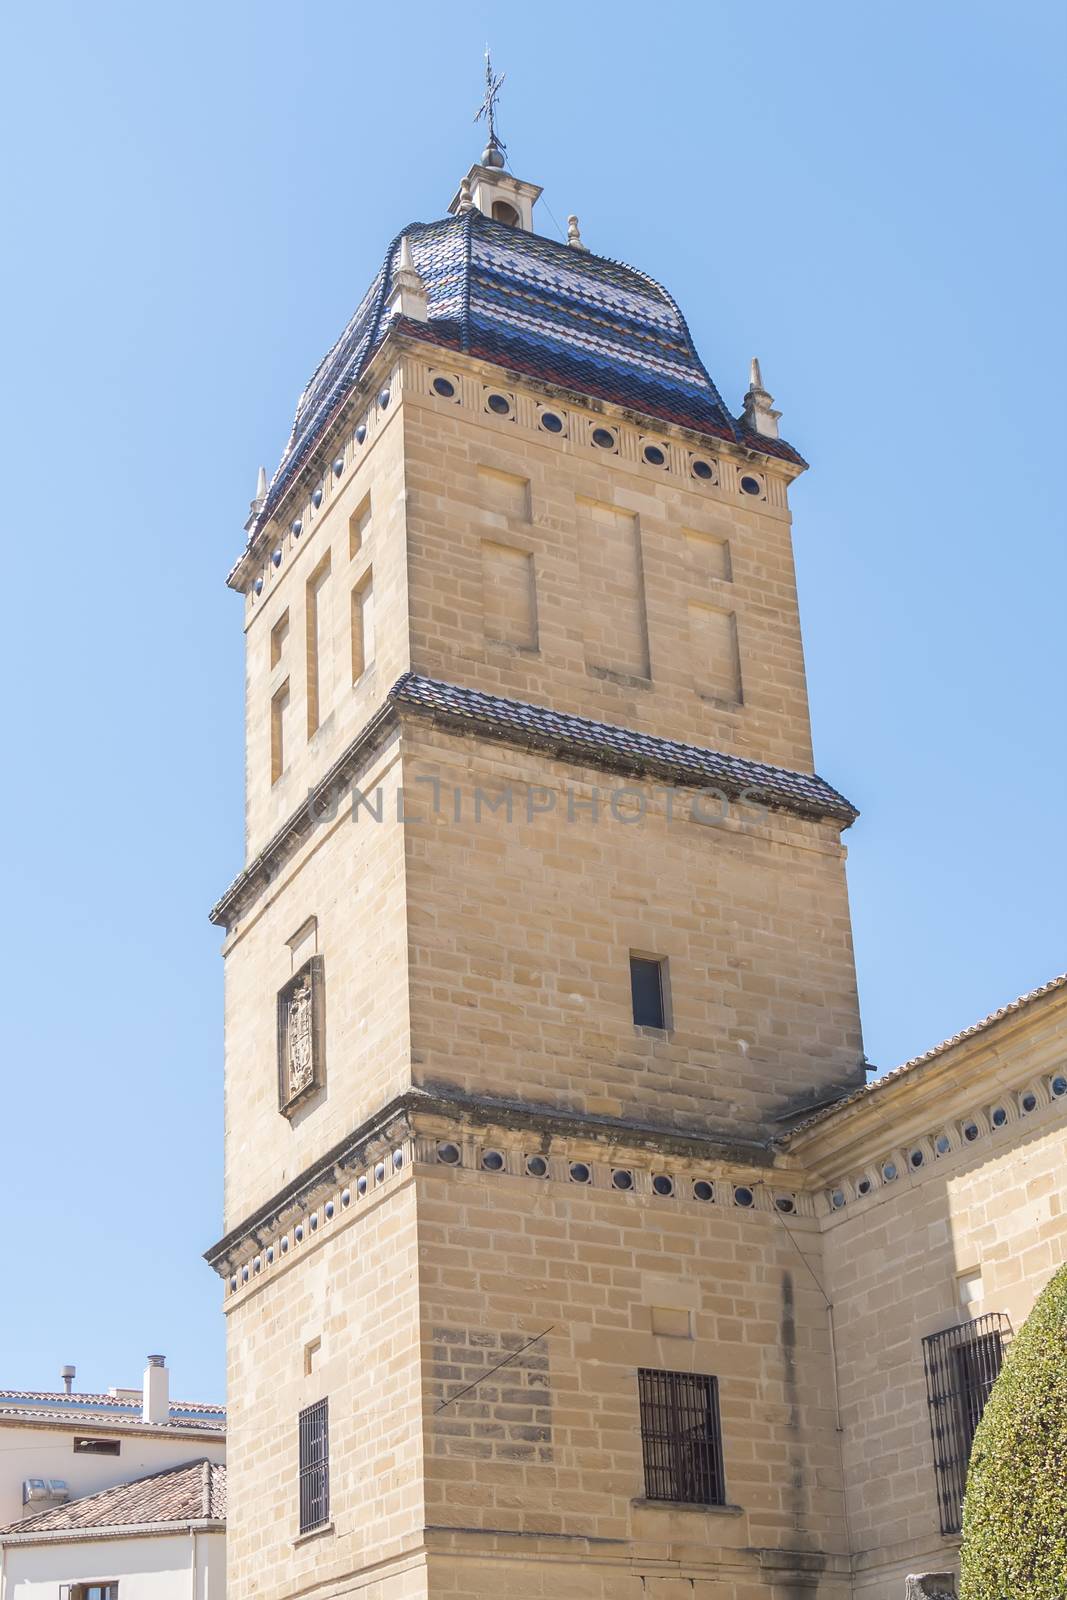 Tower of the Hospital de Santiago, Ubeda, Jaen, Spain by max8xam